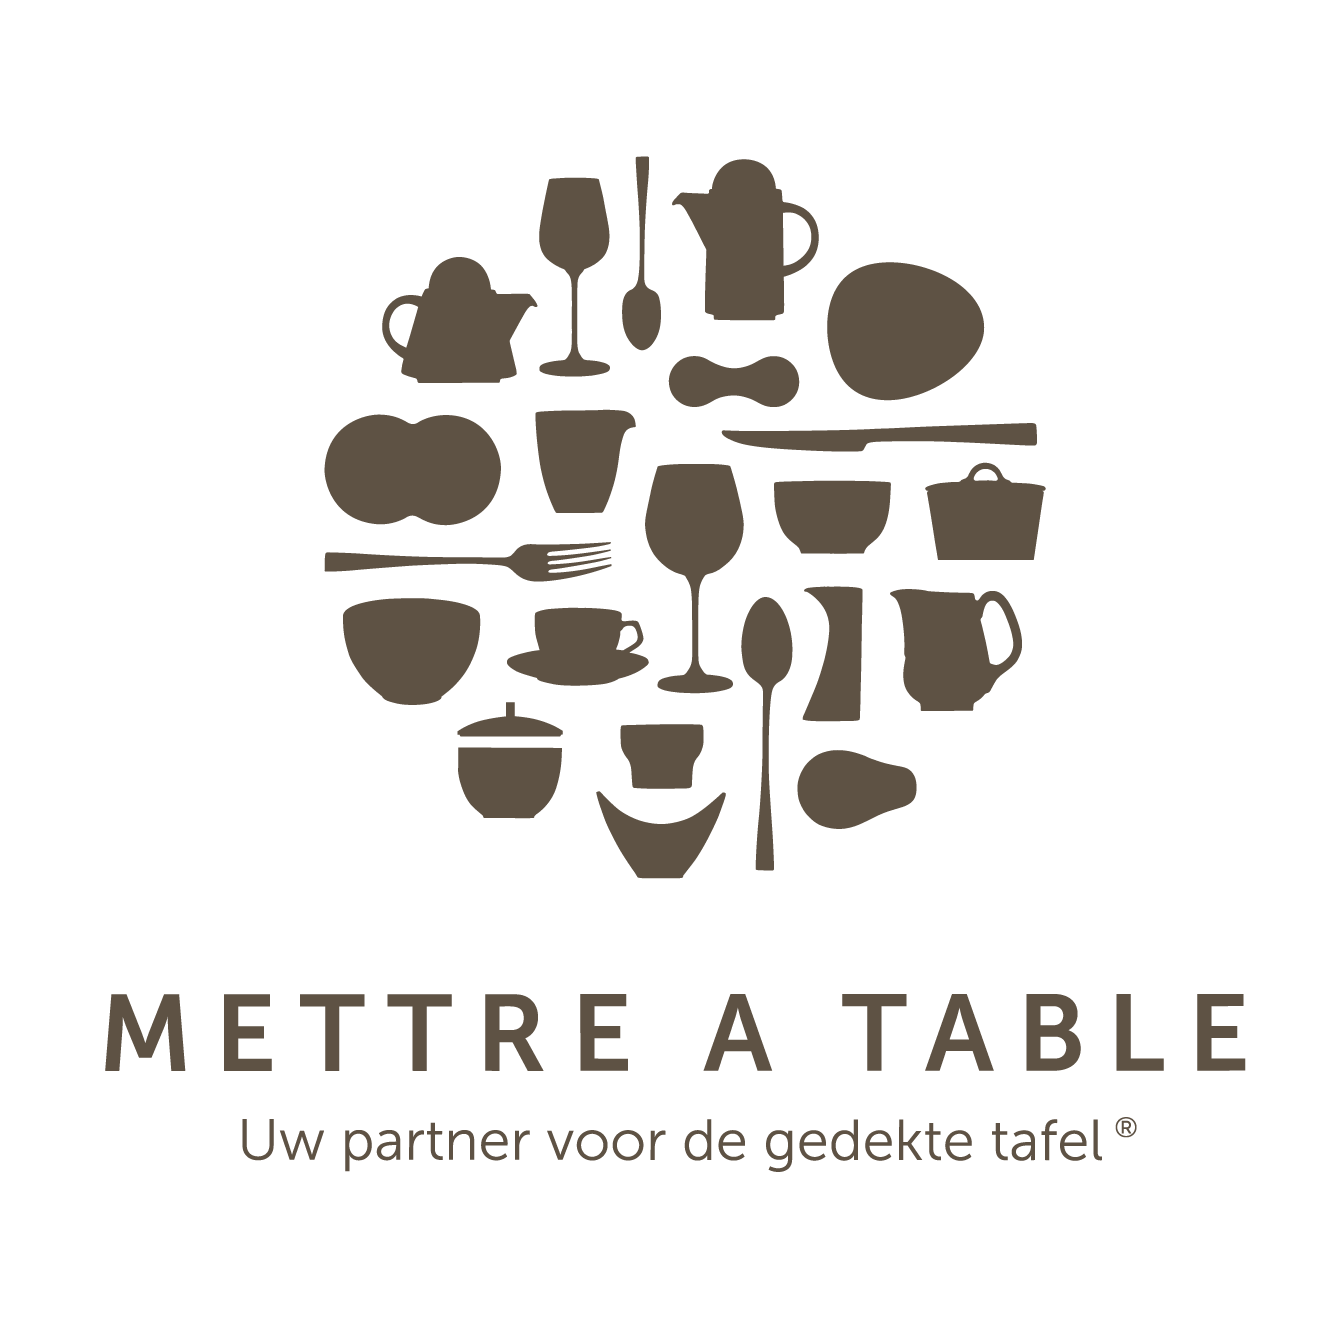 Mettre a Table International